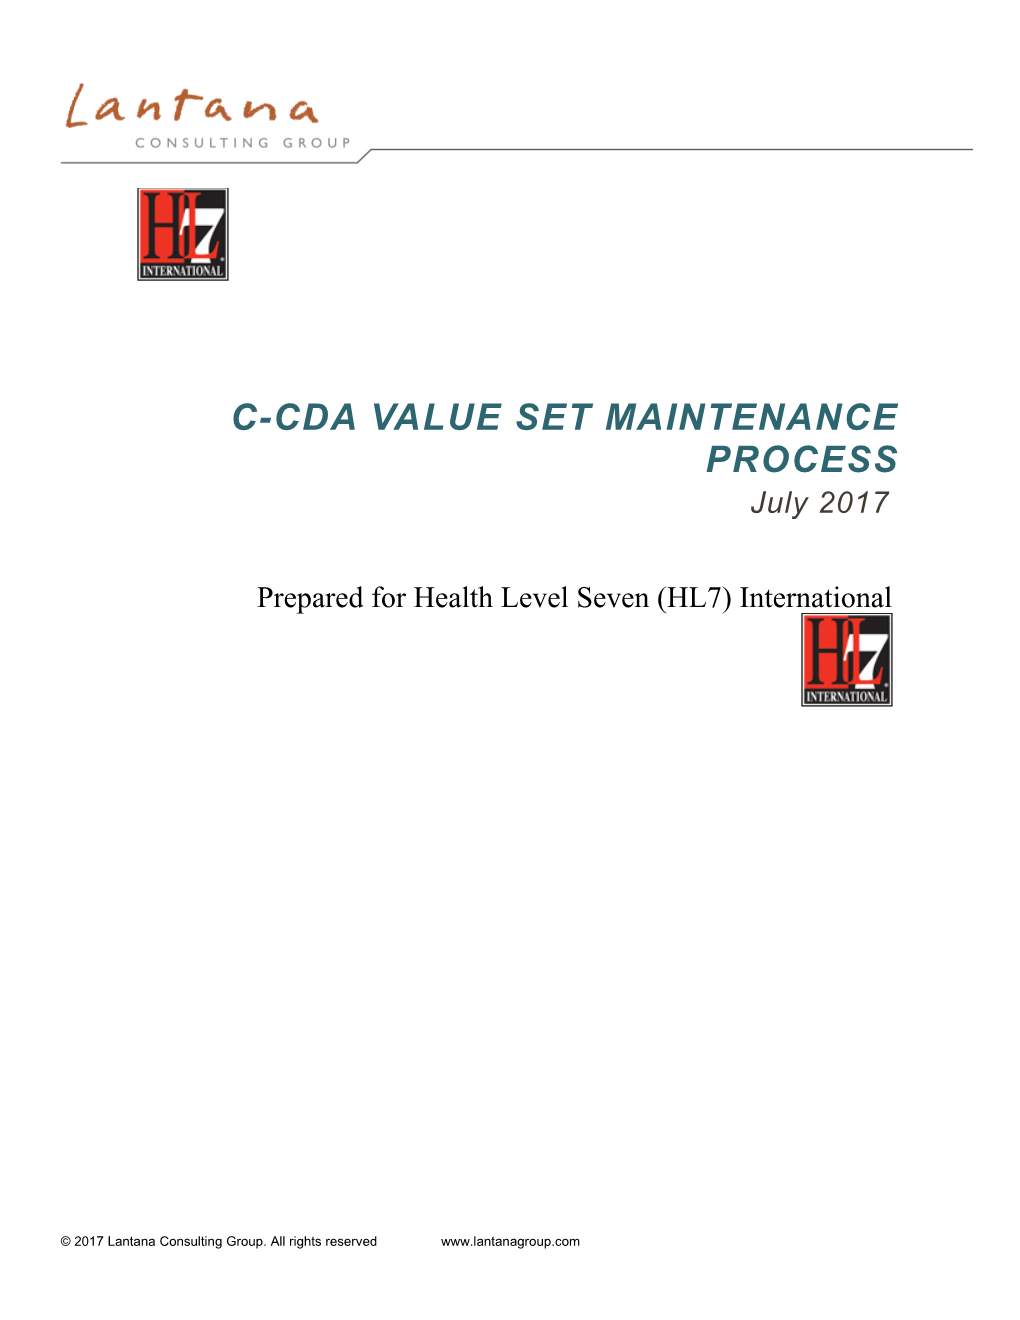 C-CDA Value Set Maintenance Process